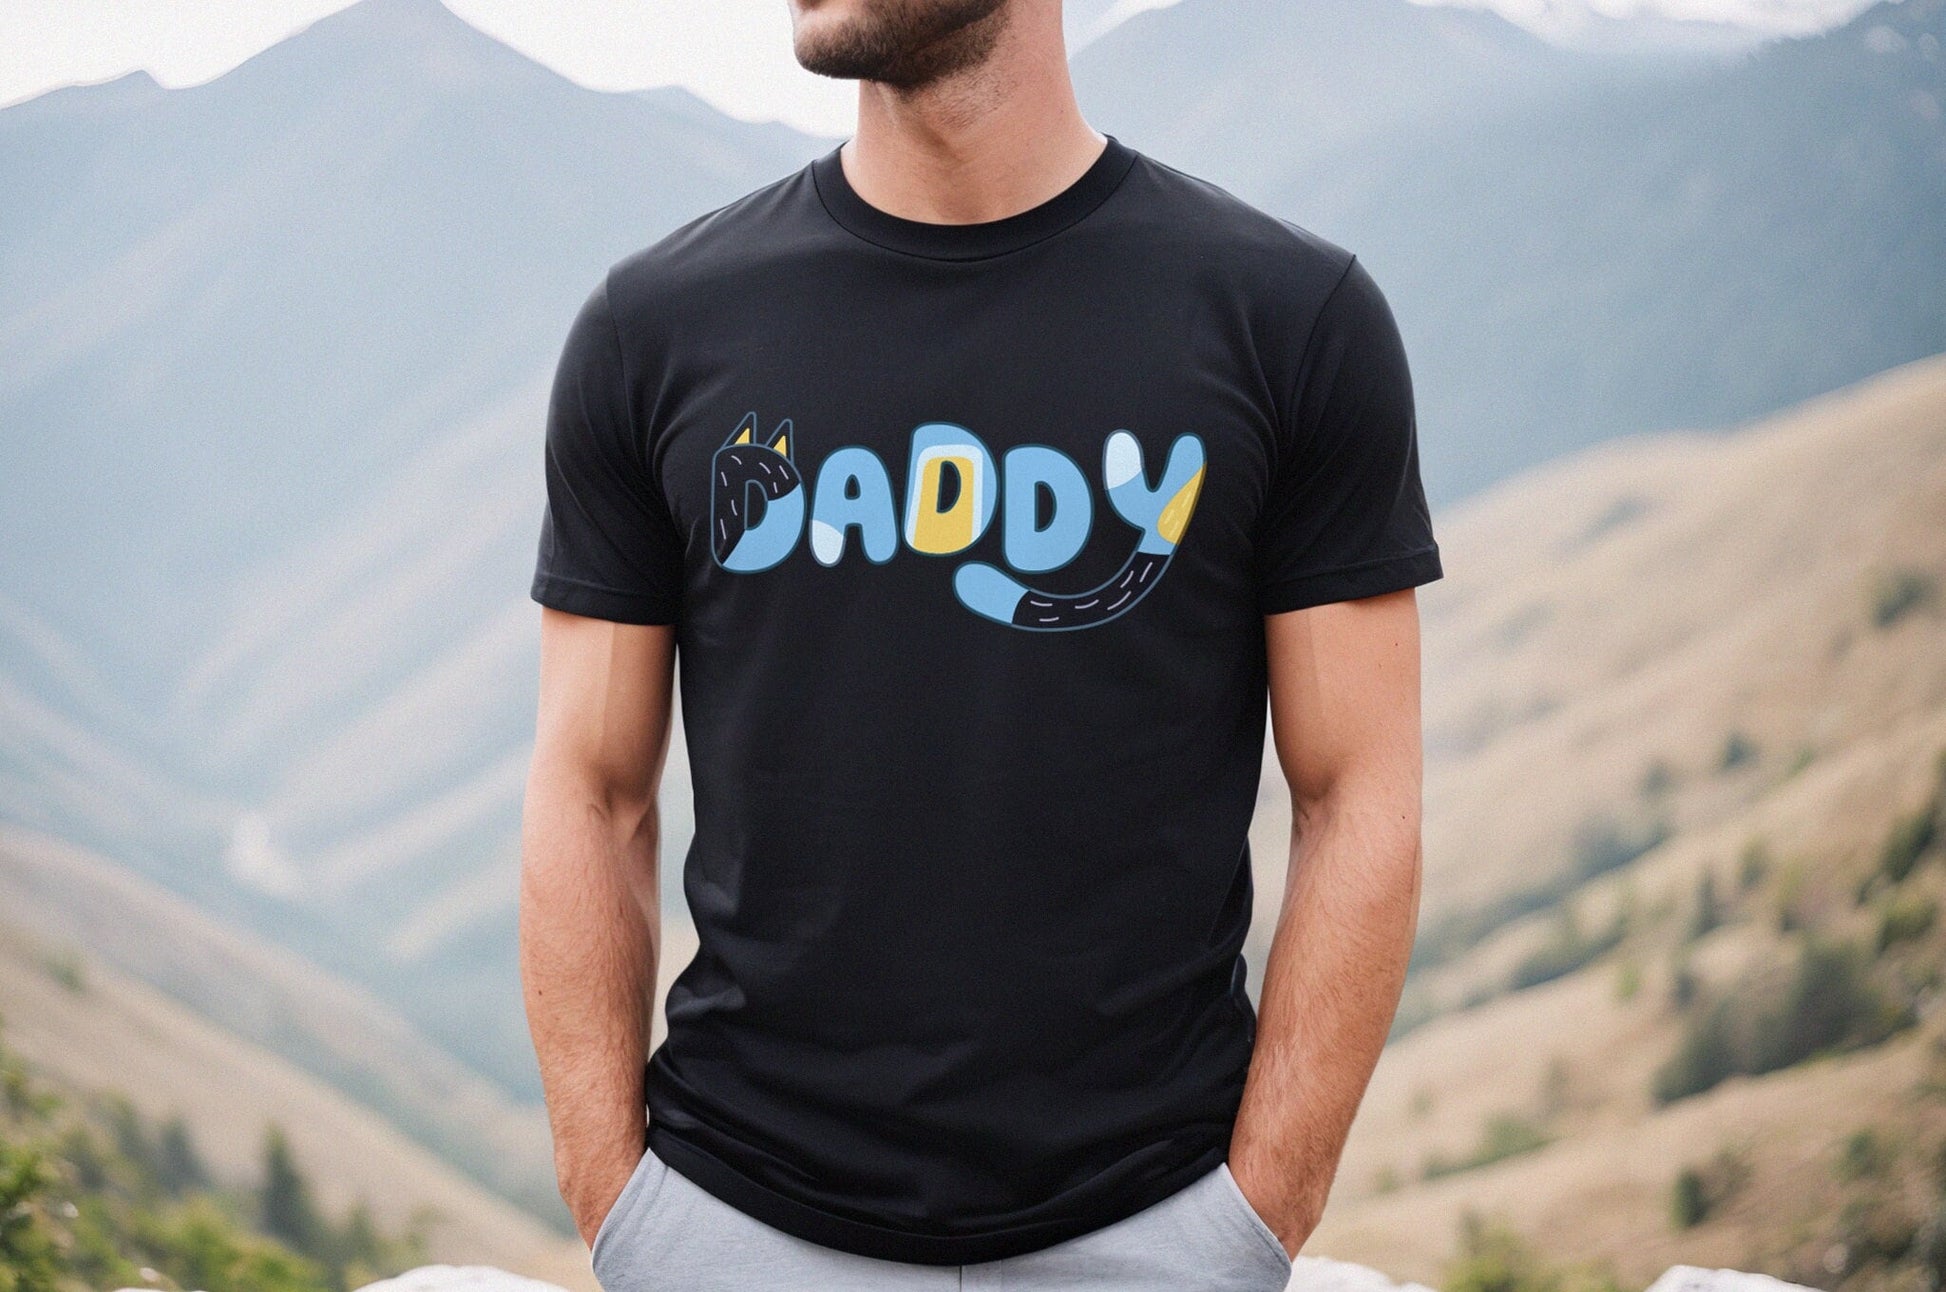 Bluey Dad T Shirt -  New Zealand